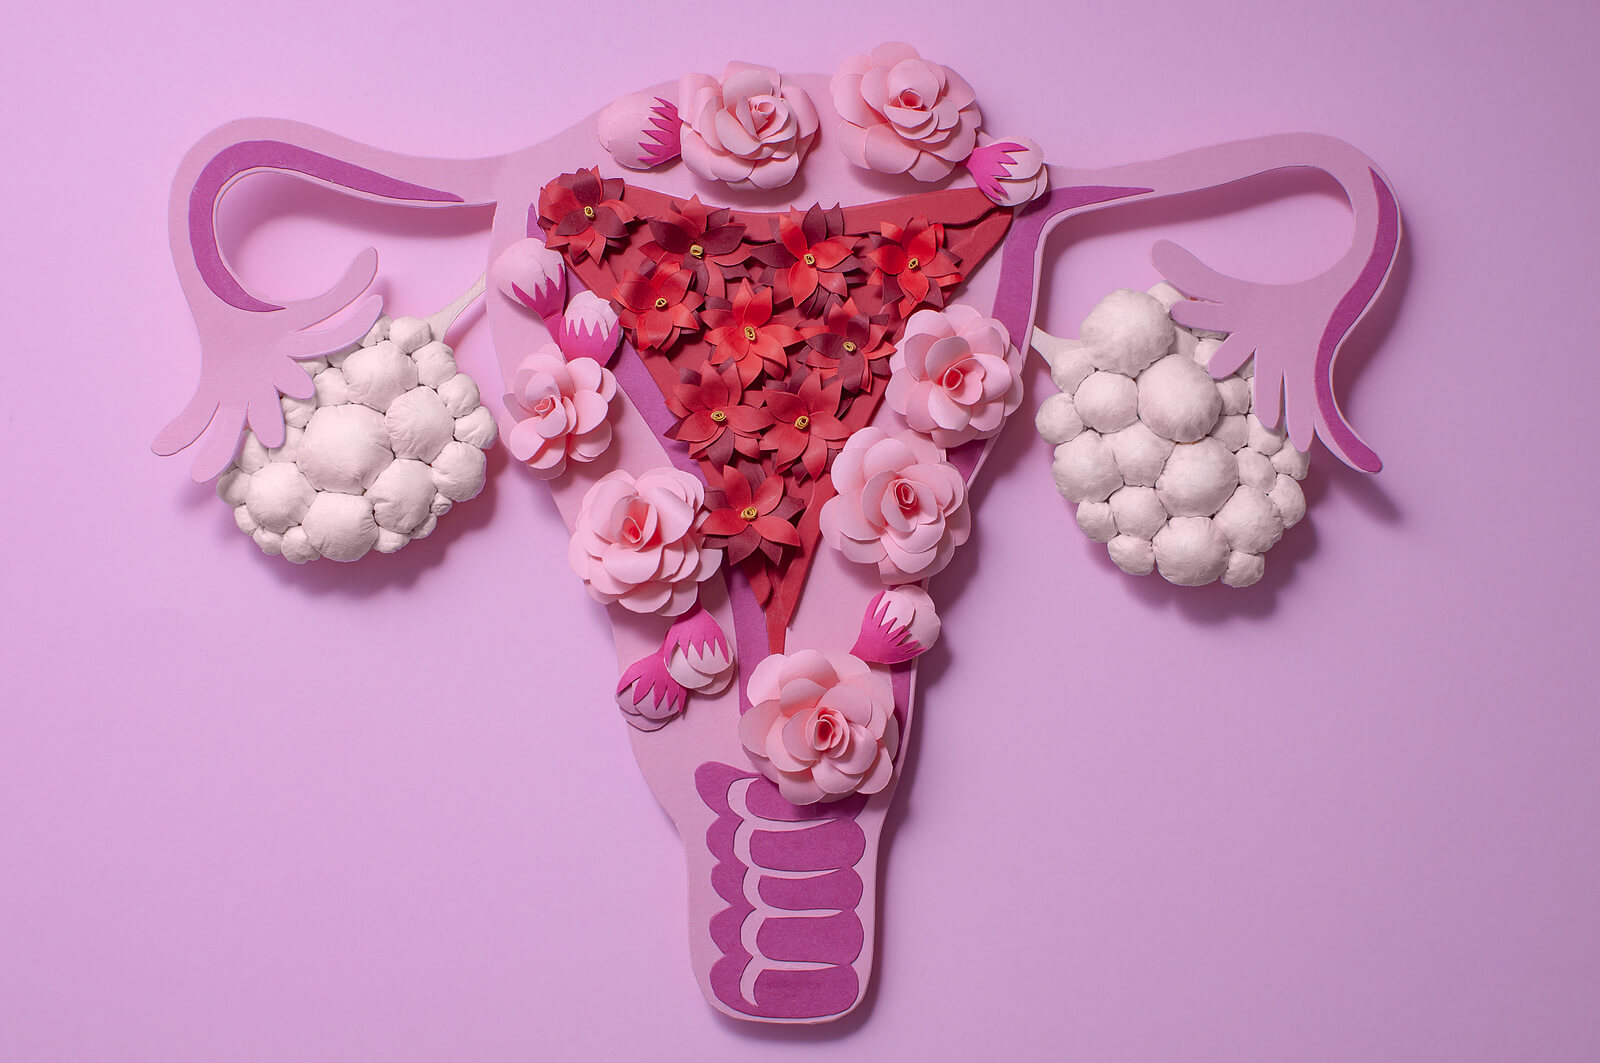 Endometriose e infertilidade: causas anatômicas e funcionais.